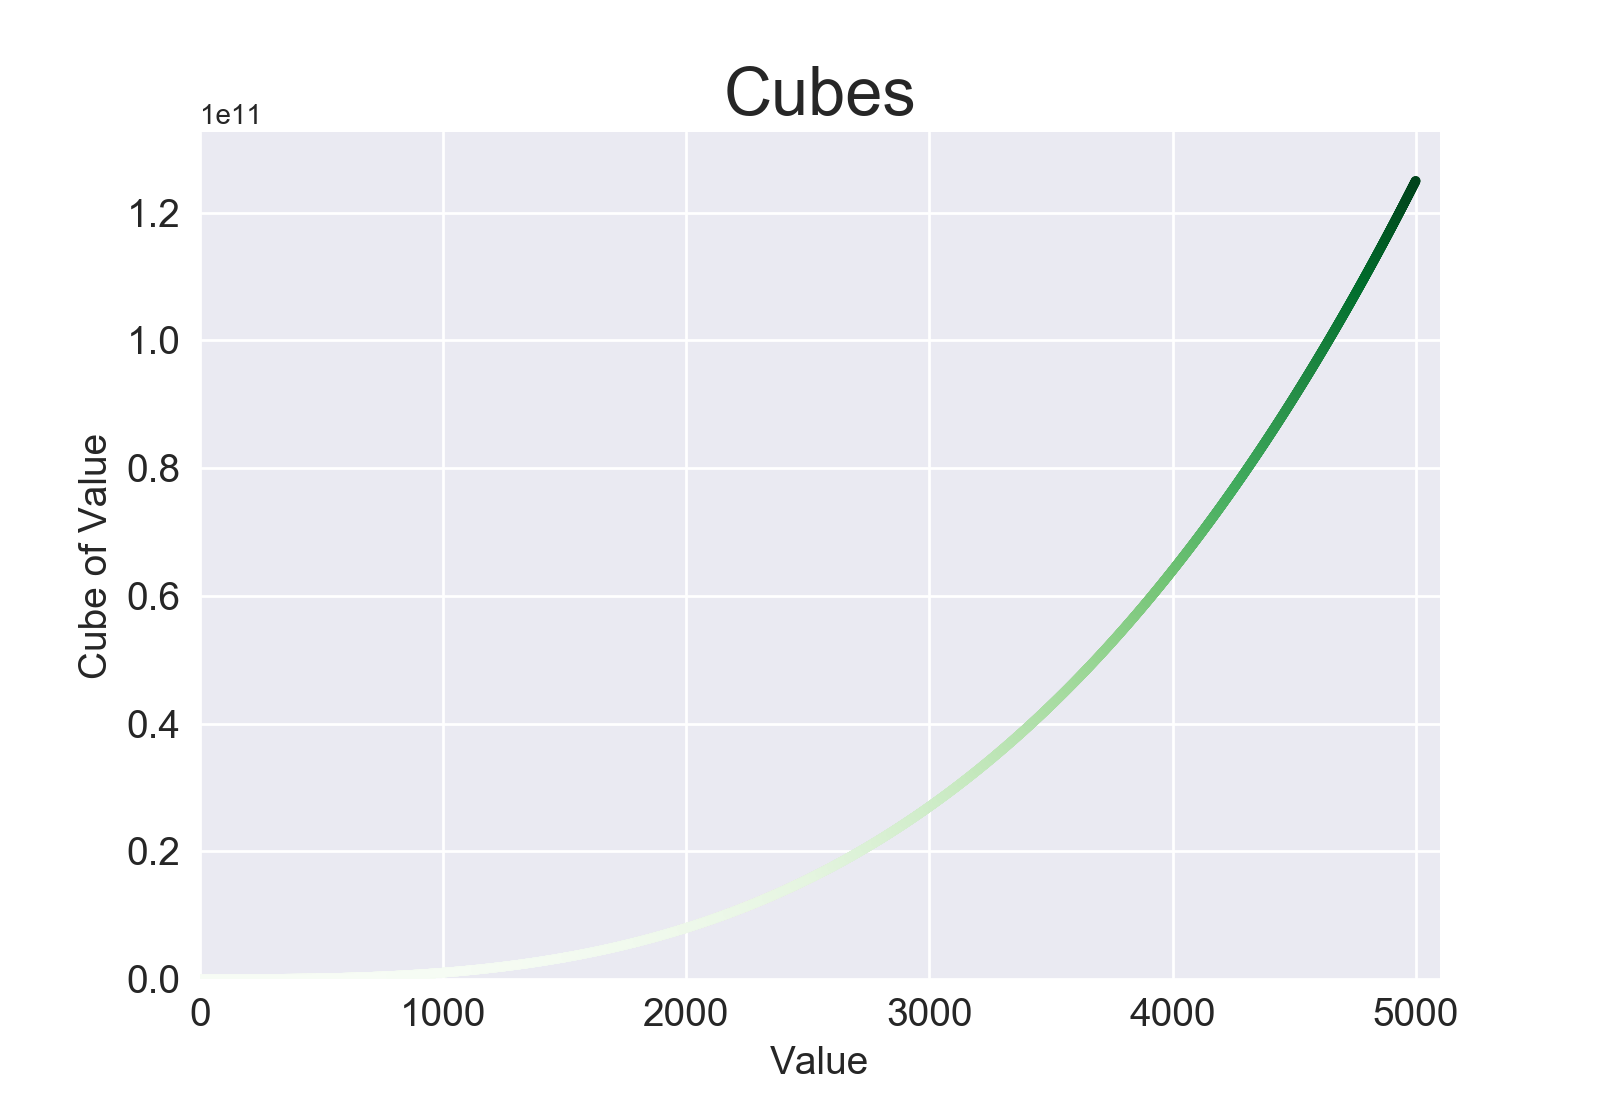 Plot showing 5000 cubes, using a colormap